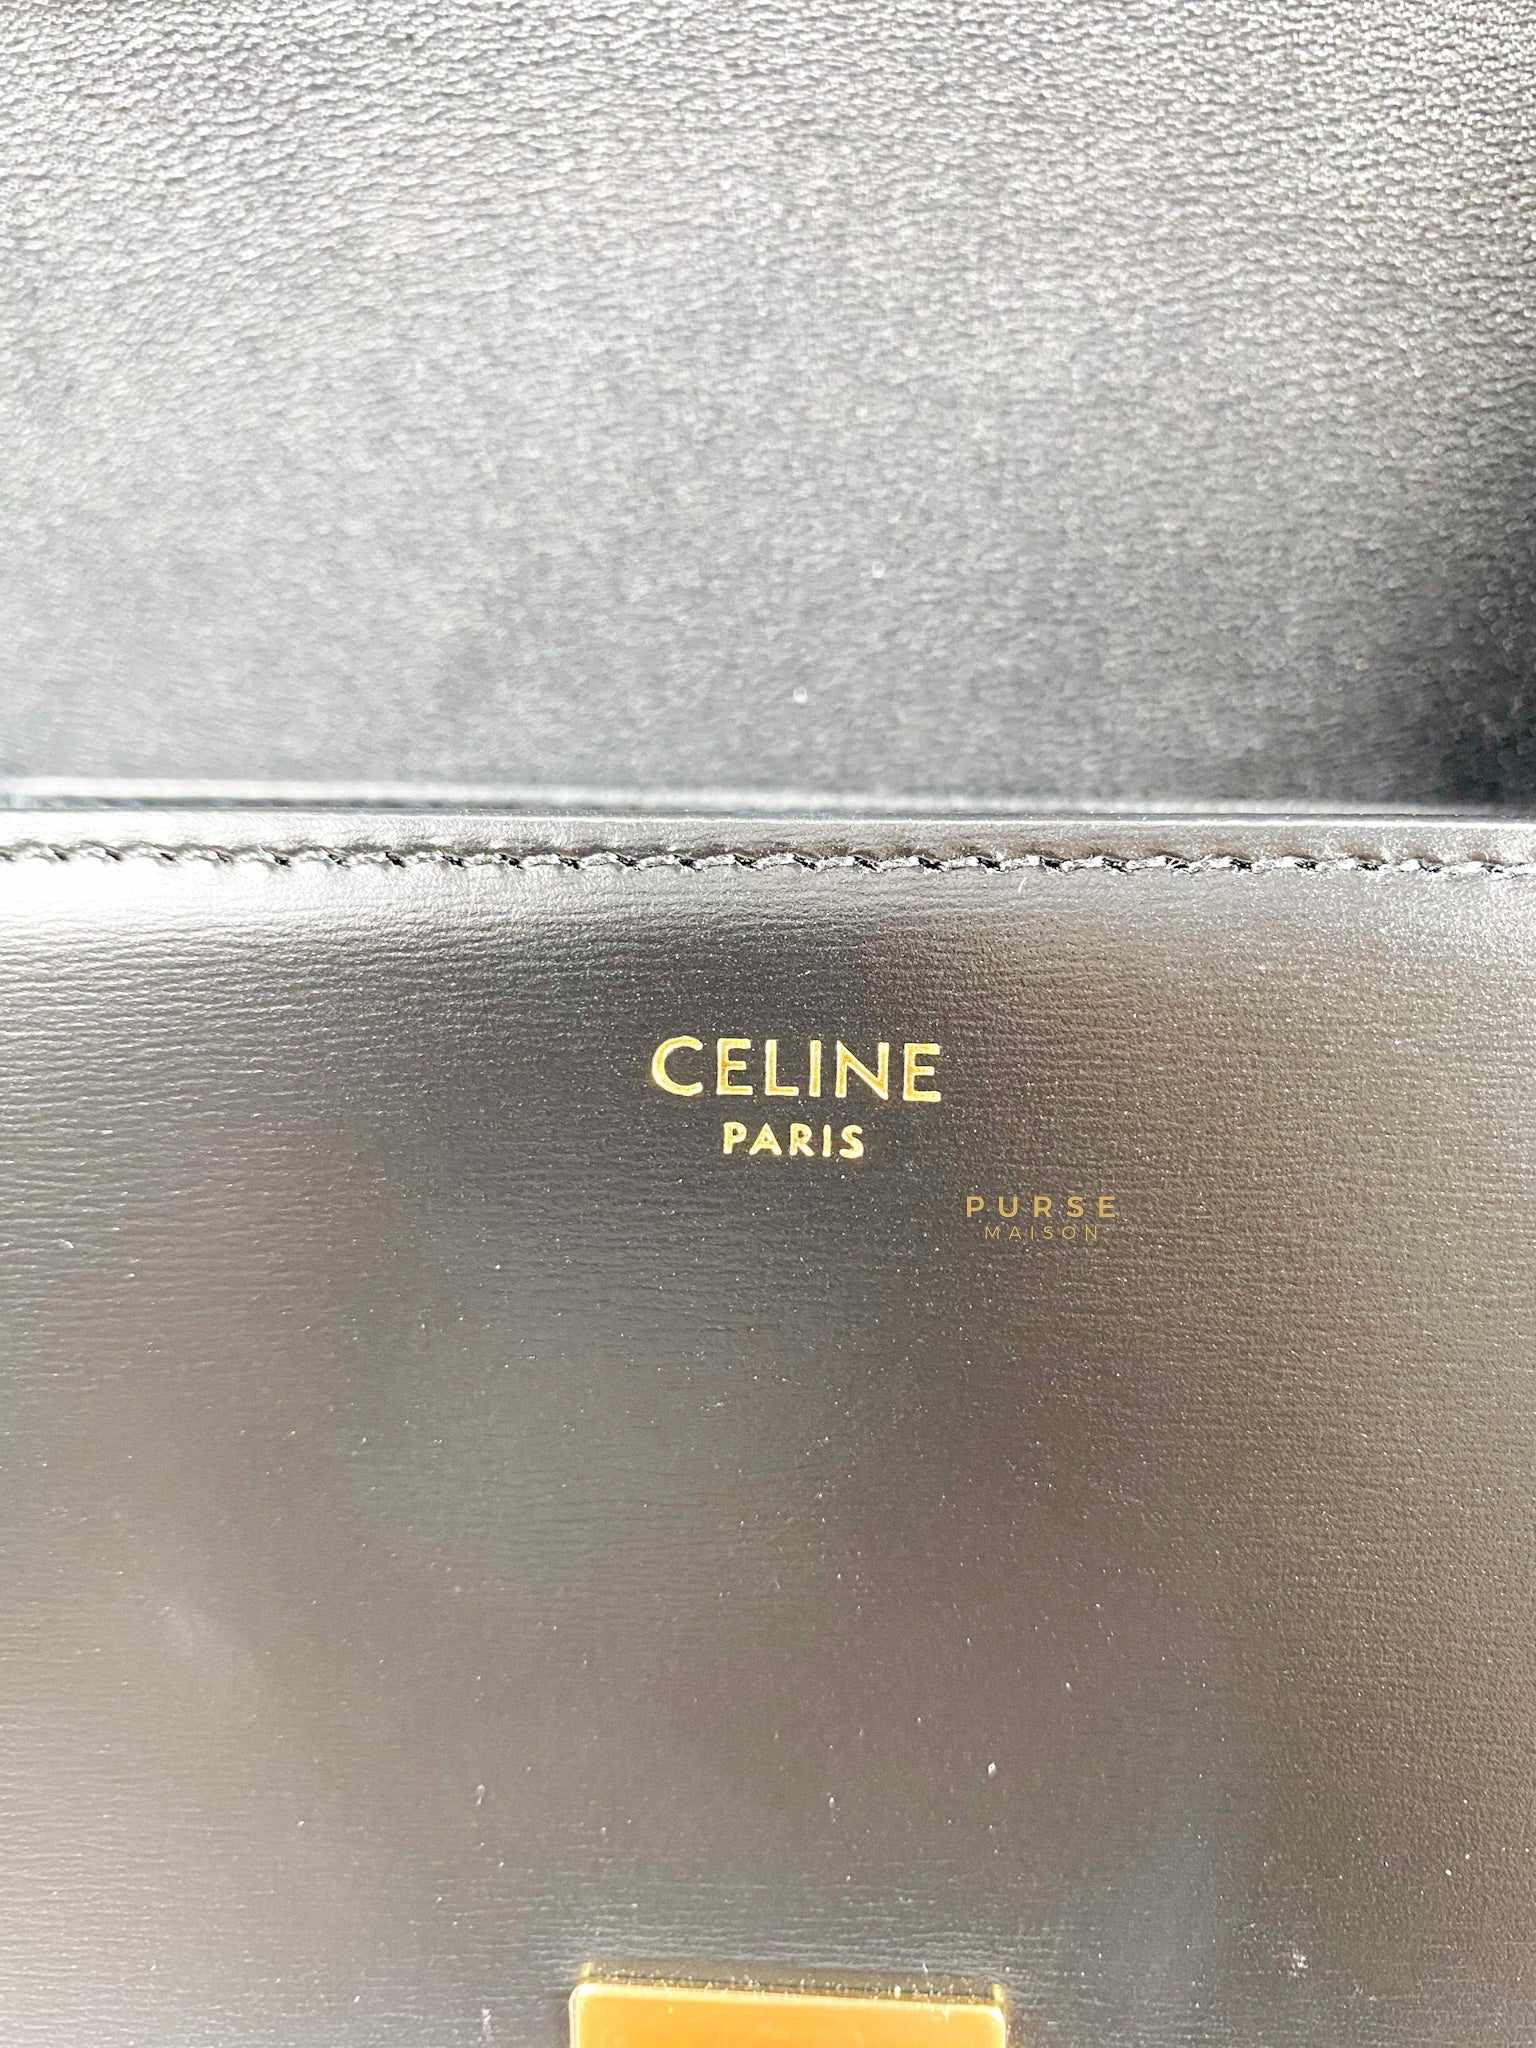 Celine Triomphe Size Guide • Petite in Paris